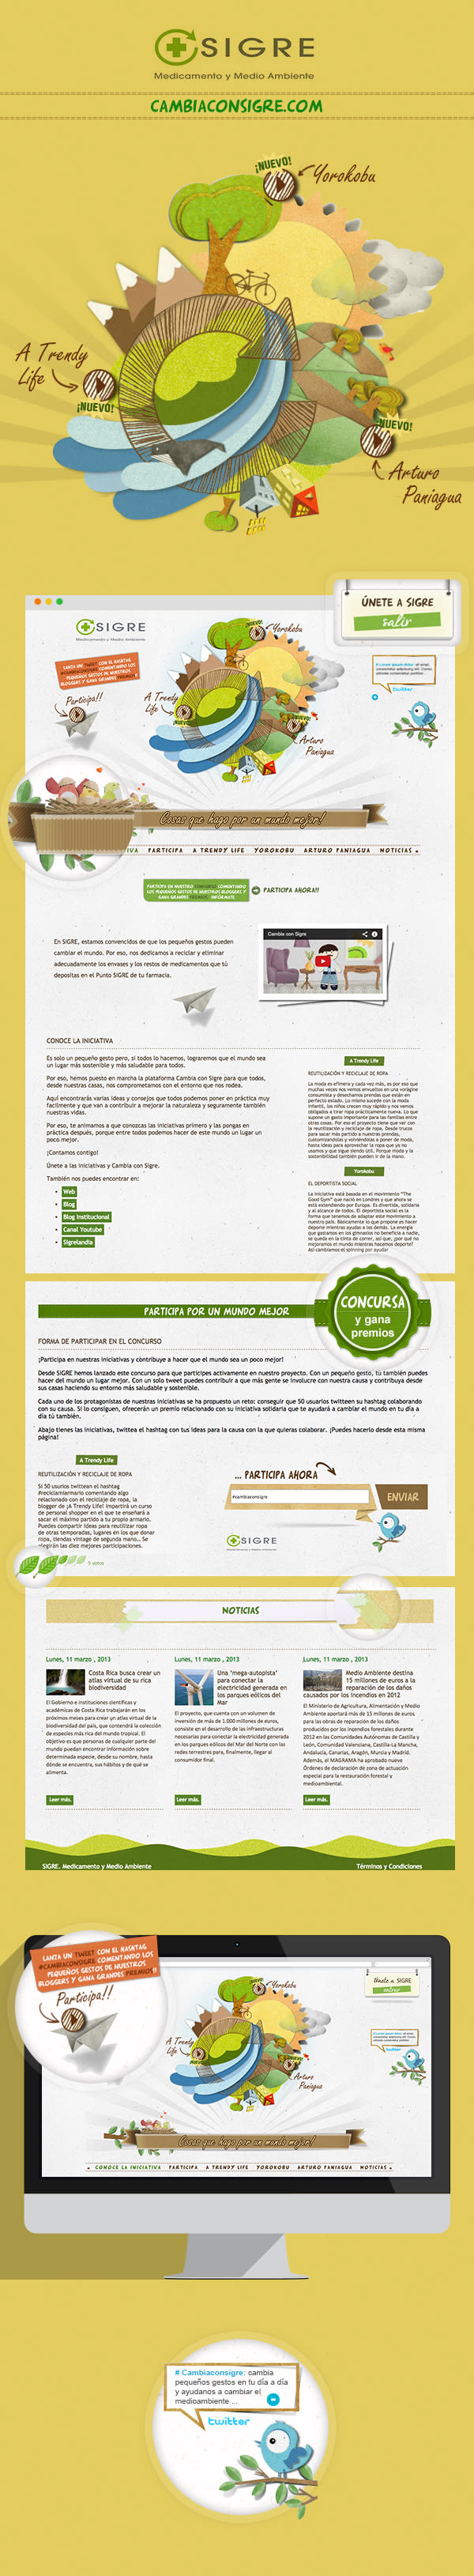 Recycle website design | Cambia con SIGRE  0